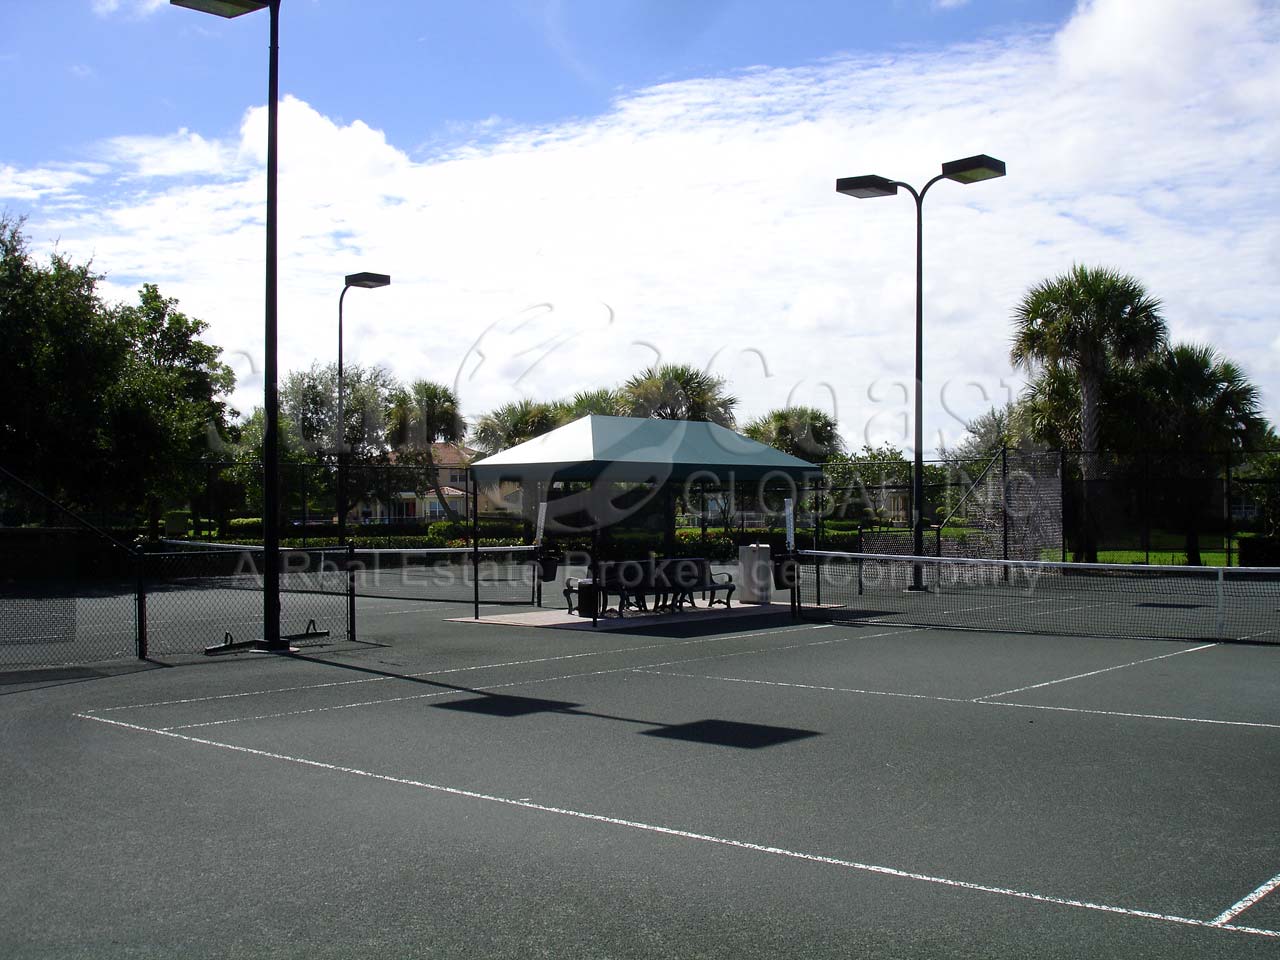 SATURNIA LAKES Tennis Courts